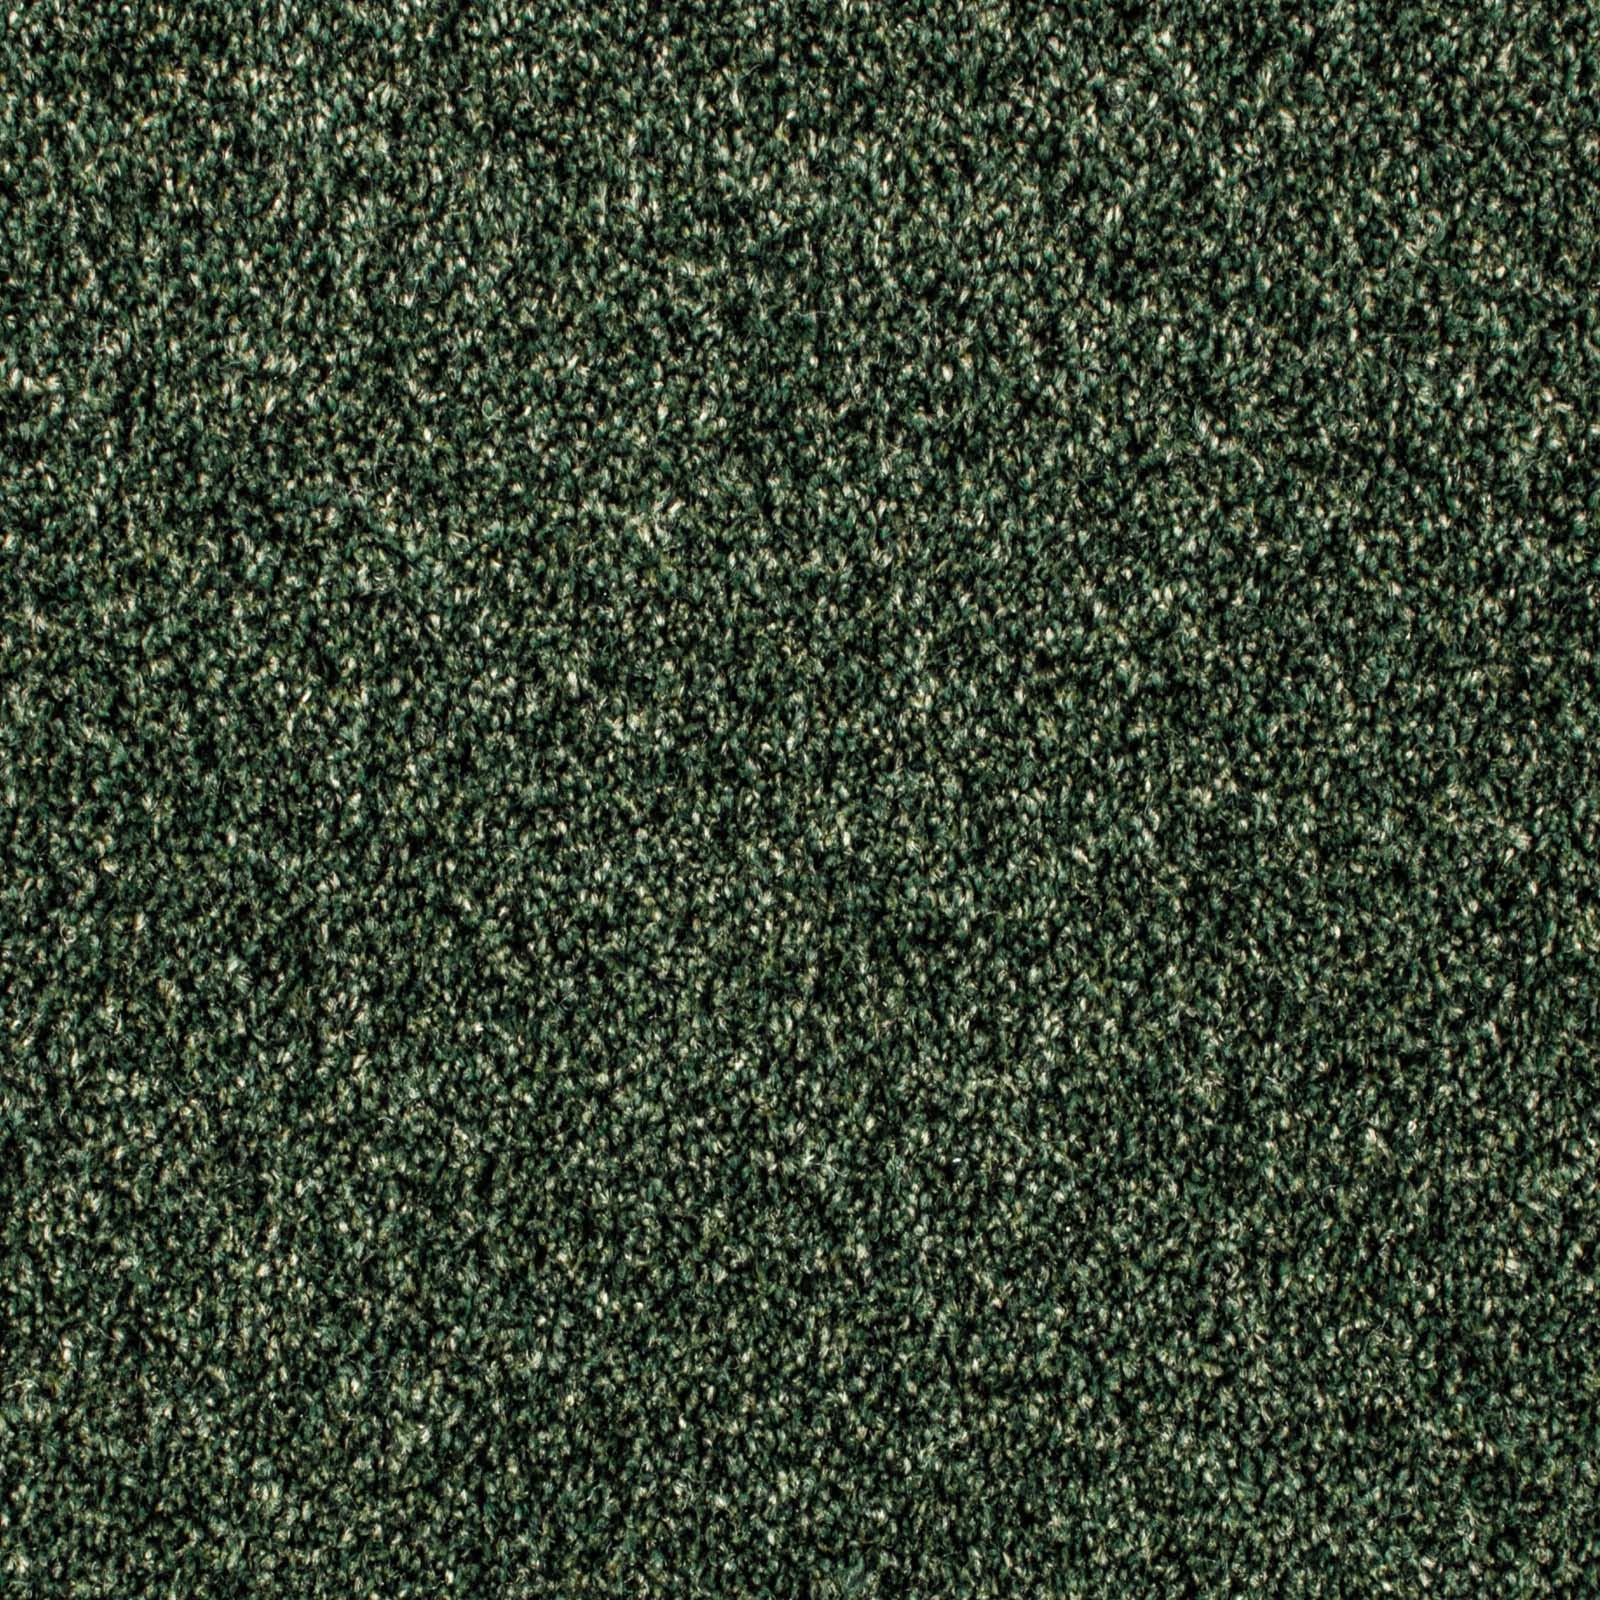 Rich Green Almeria Saxony Carpet